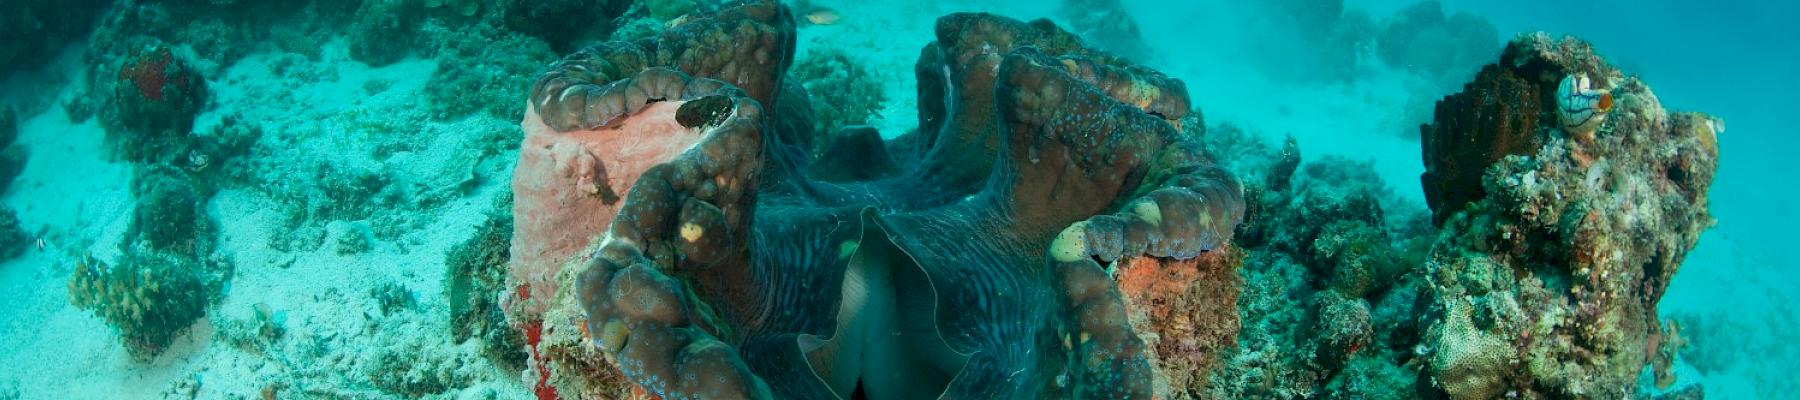 Giant clam (Tridacna gigas) in the reef, Palawan Philippines © Jürgen Freund / WWF